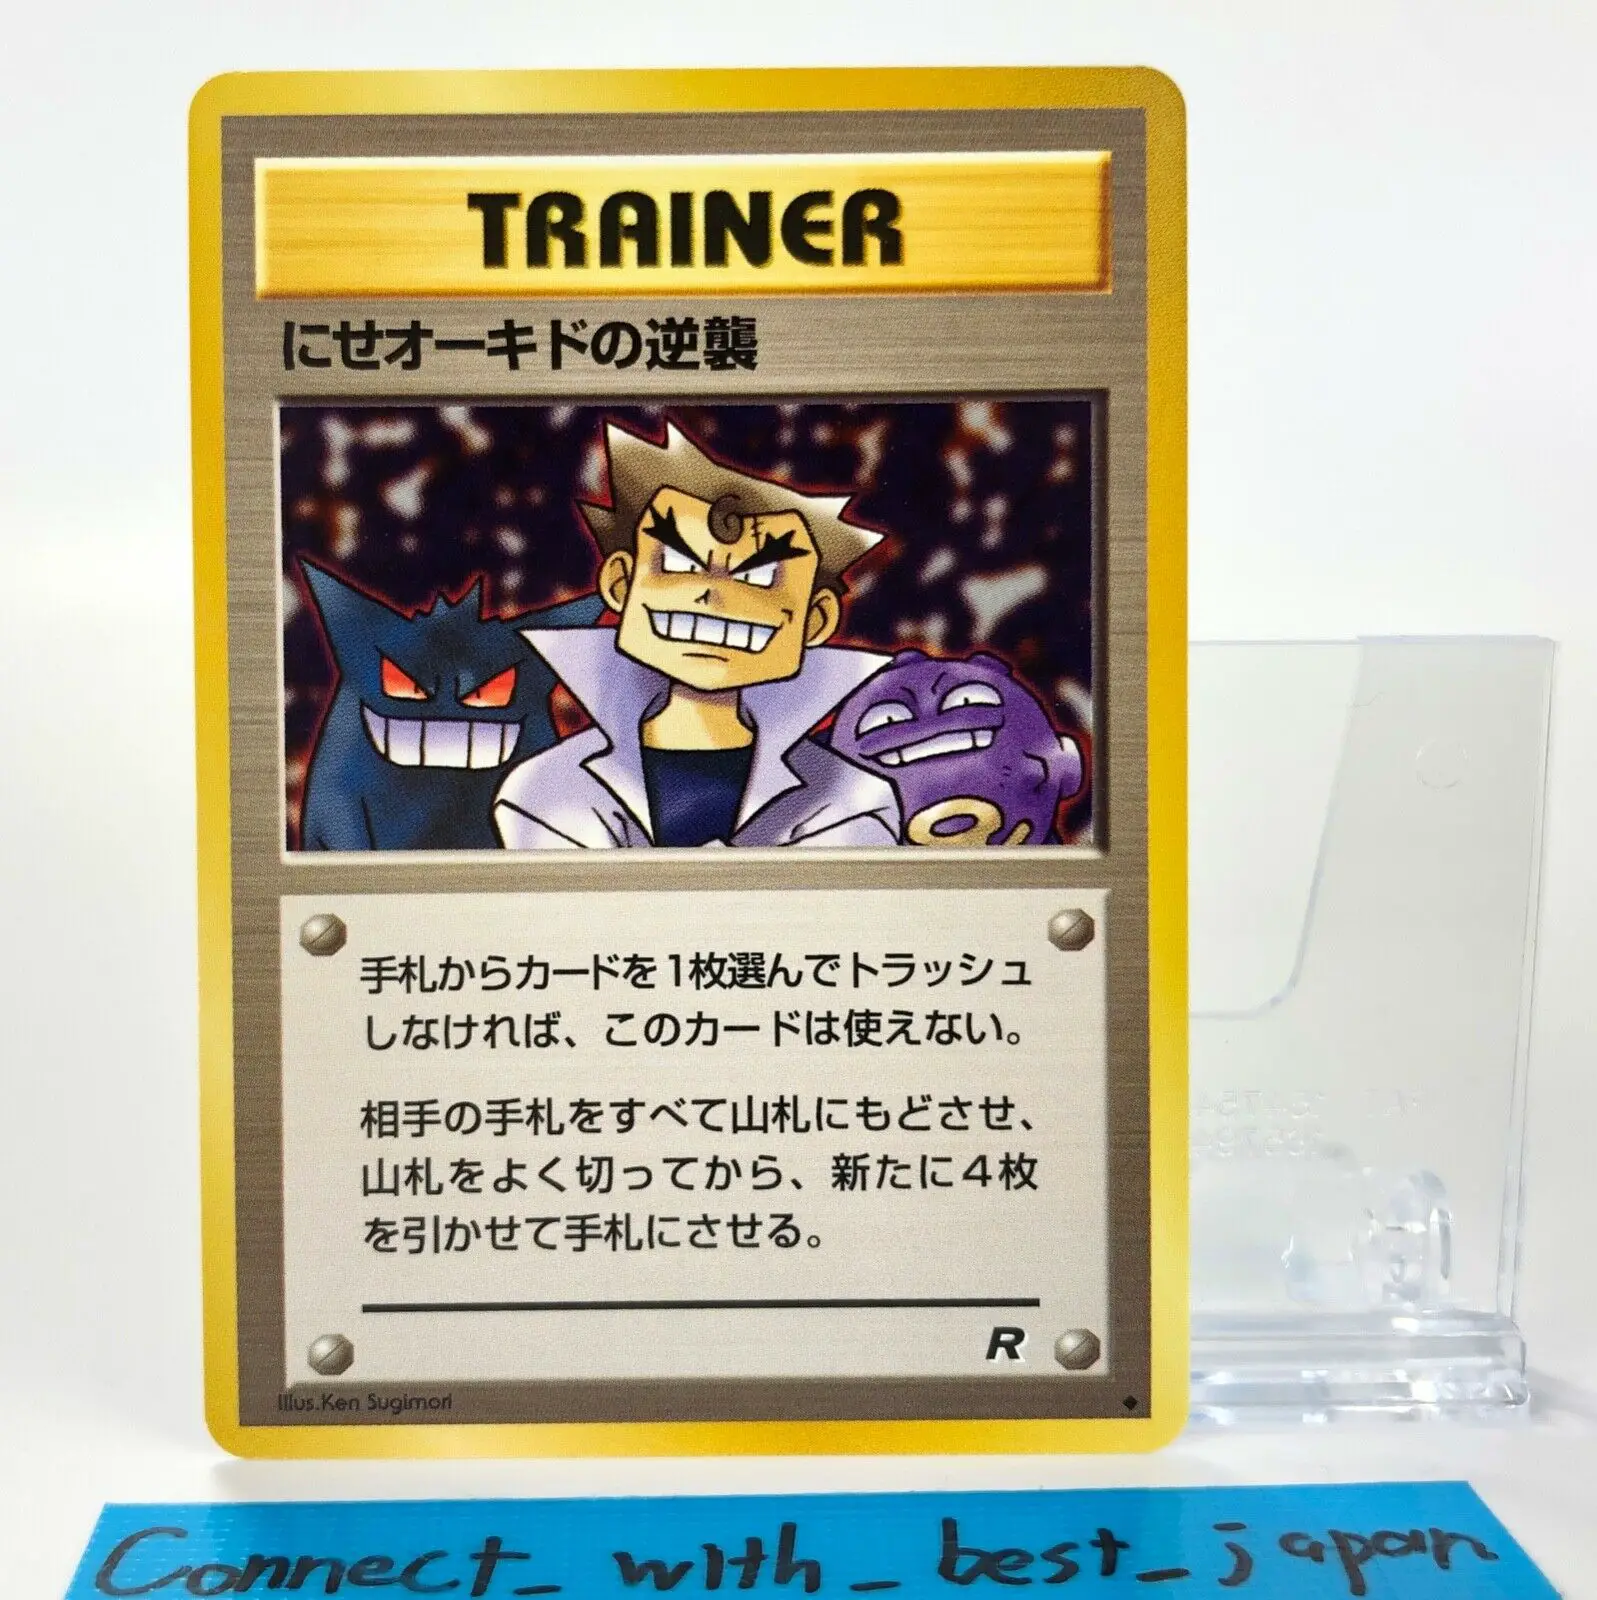 Japanese trainer pokemon card Value: $0.99